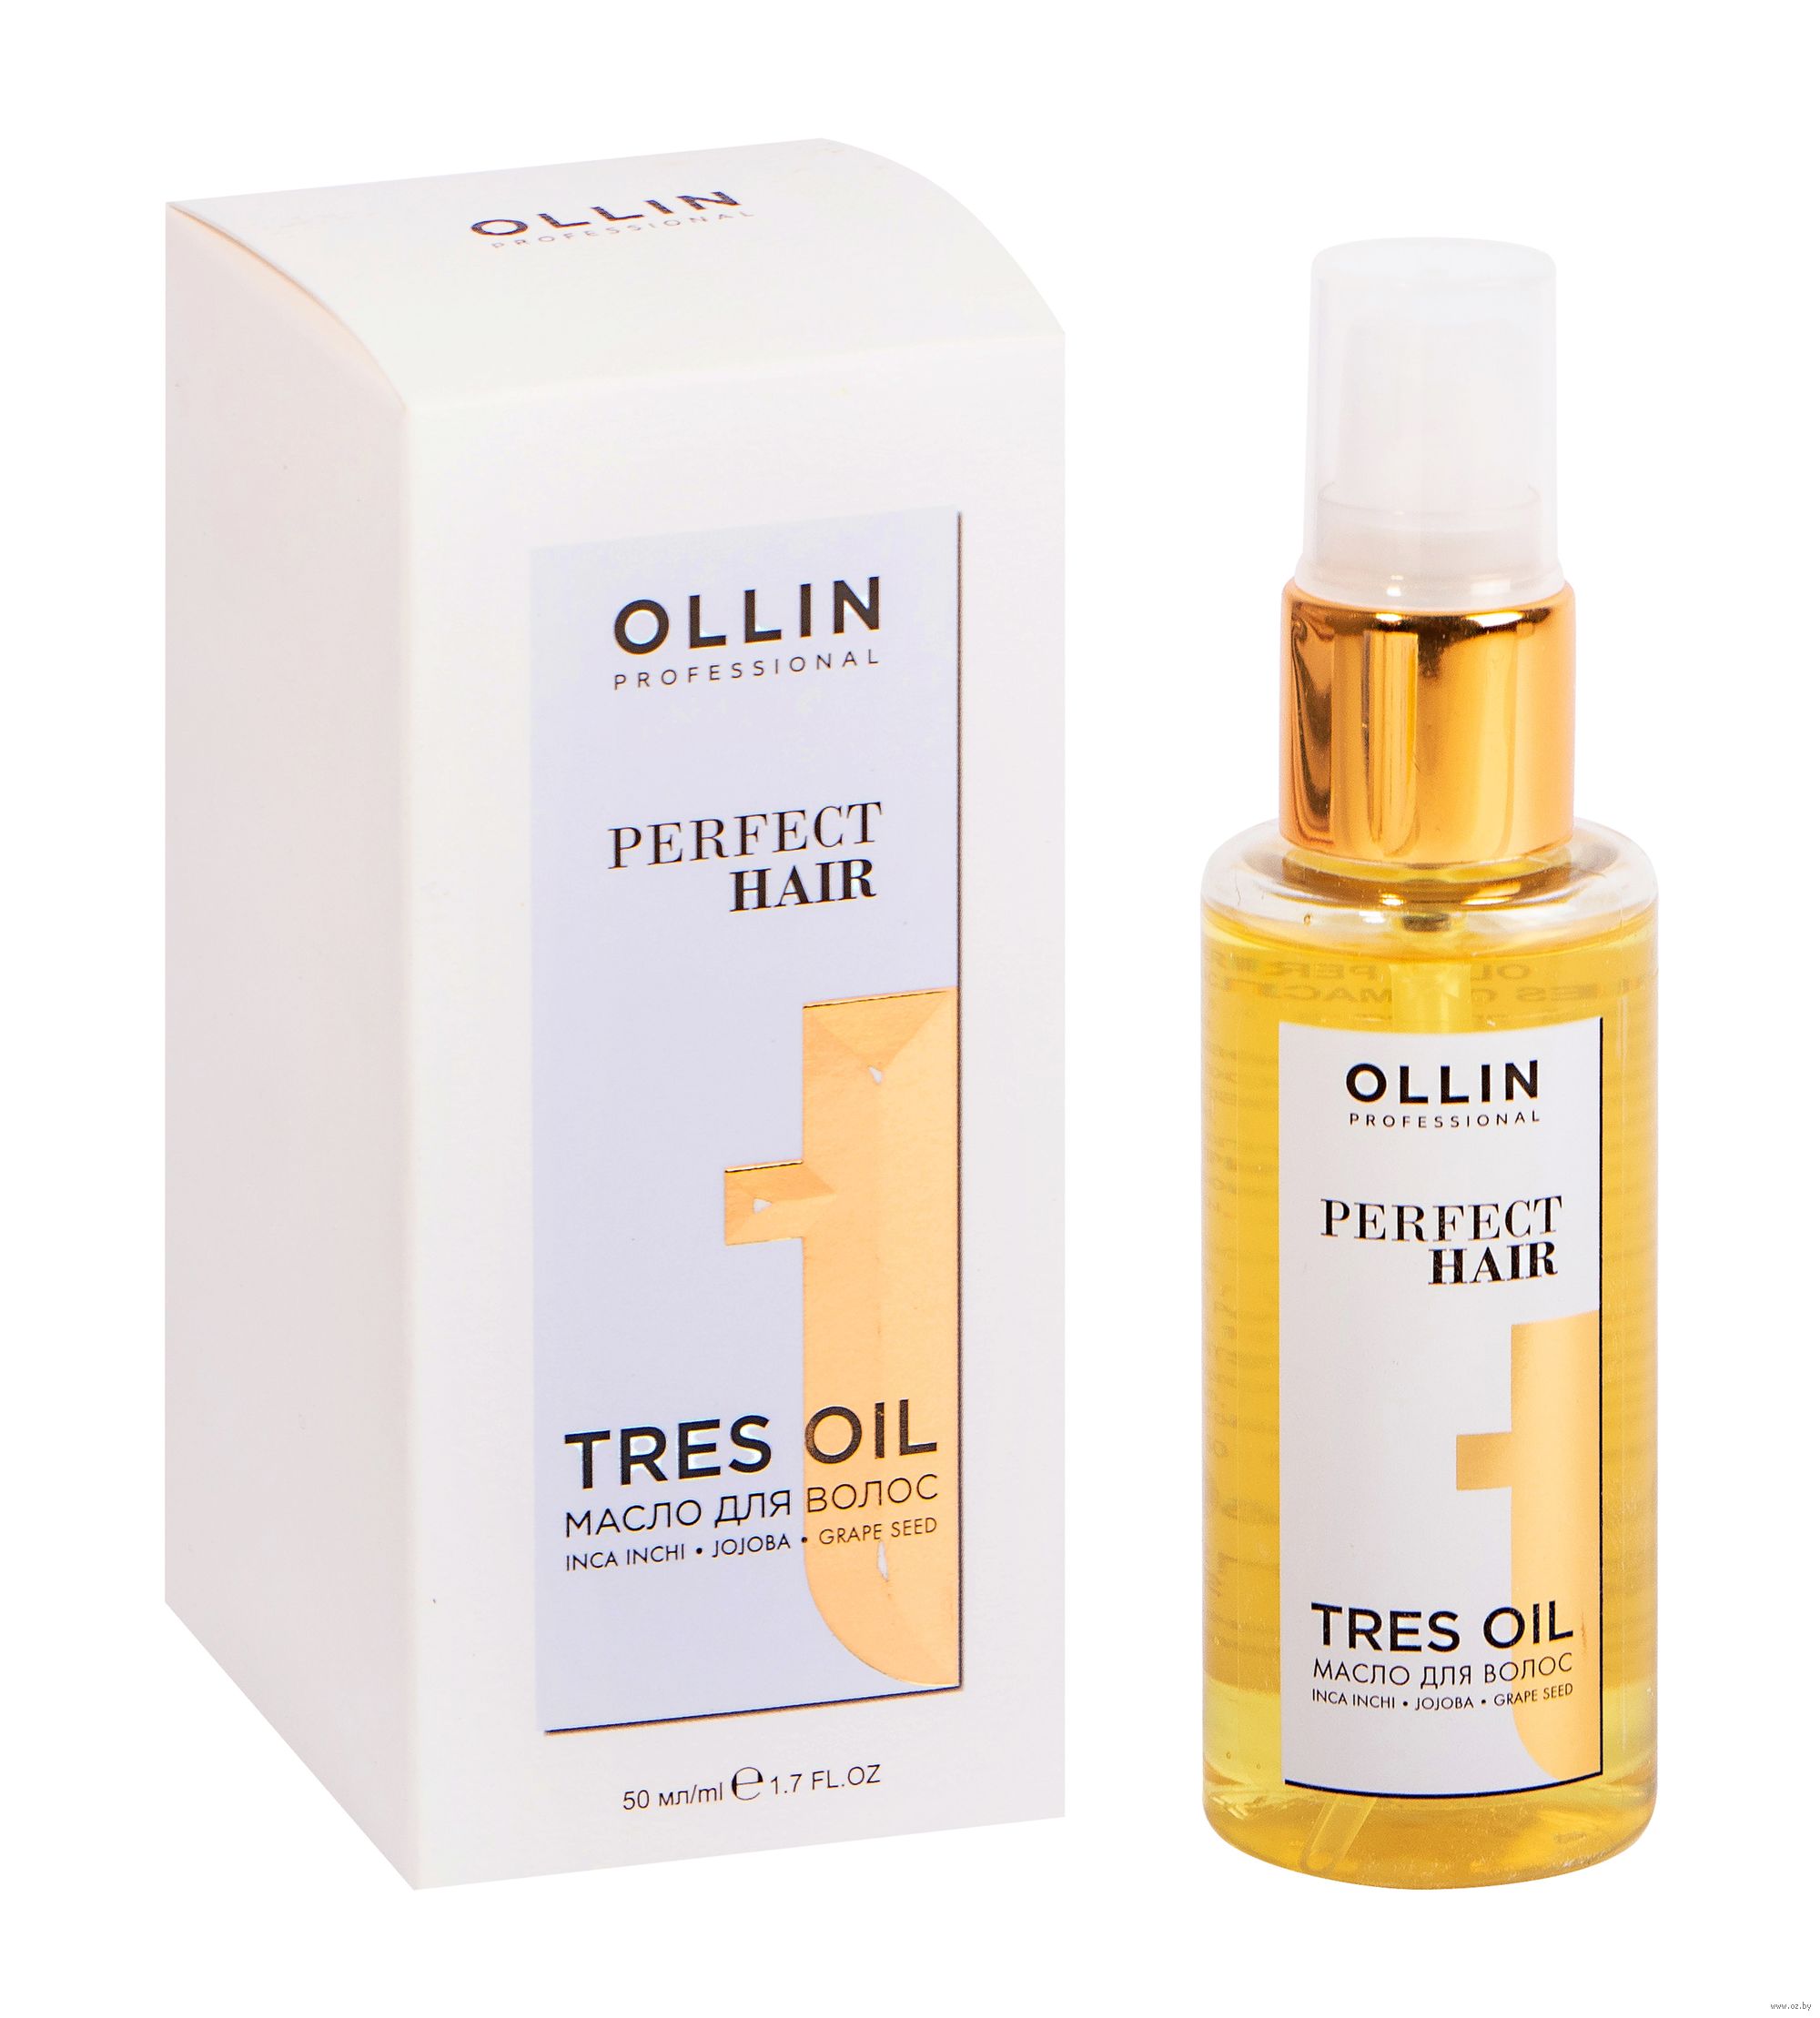 Масло hair oil отзывы. Ollin tres Oil. Масло инчи для волос. Перфект для волос. Масло для волос Ollin perfect hair.